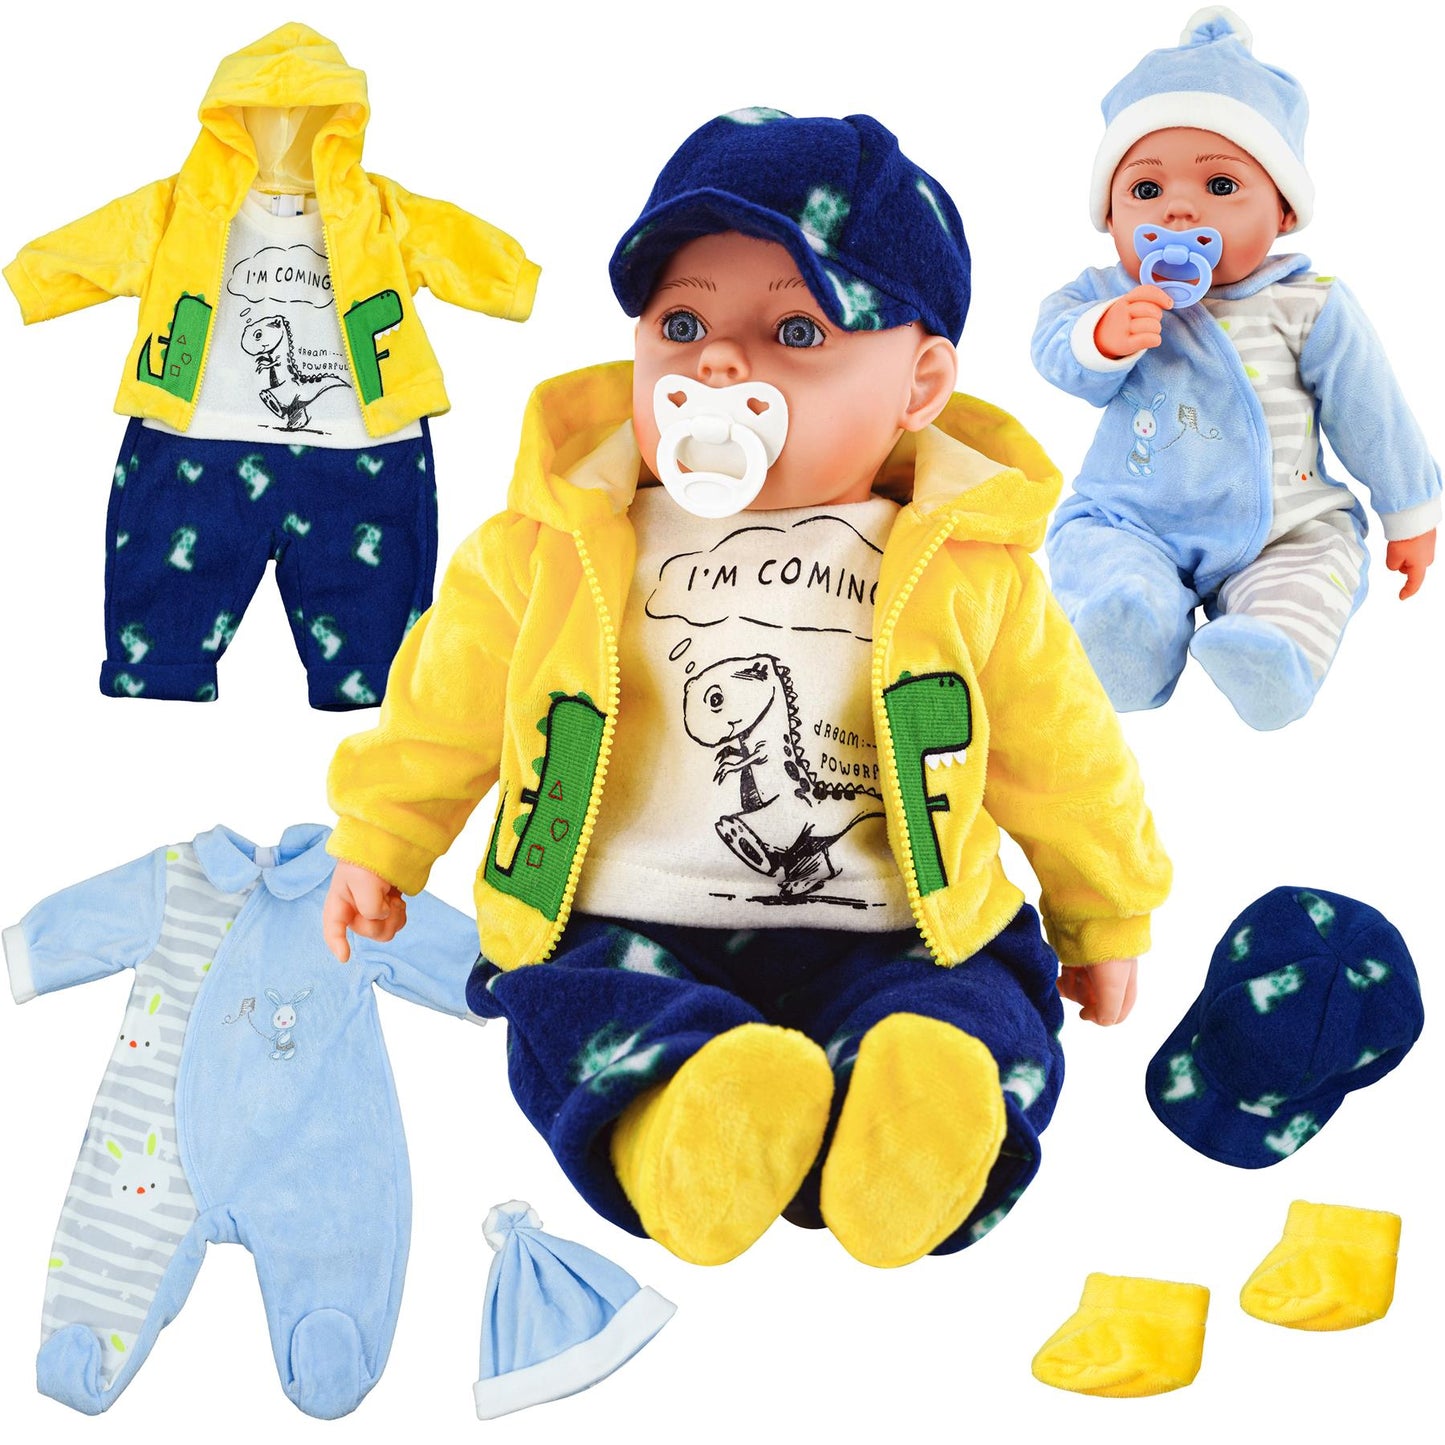 20” Boy Doll Clothes Set of 2 - Blue/Yellow by BiBi Doll - UKBuyZone